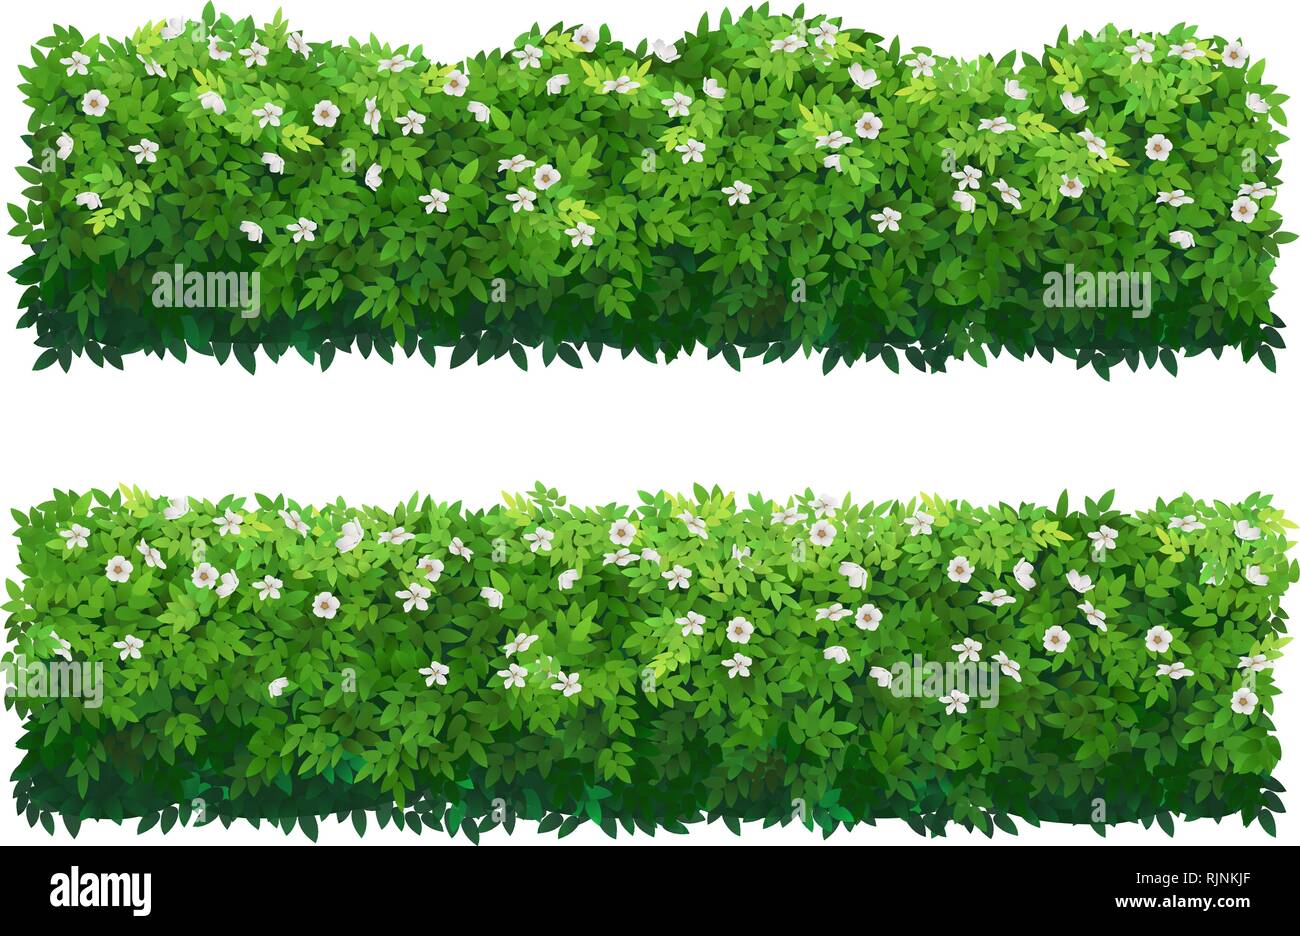 Flowering bush green hedge. Boxwood or hibiscus shrubs. Stock Vector